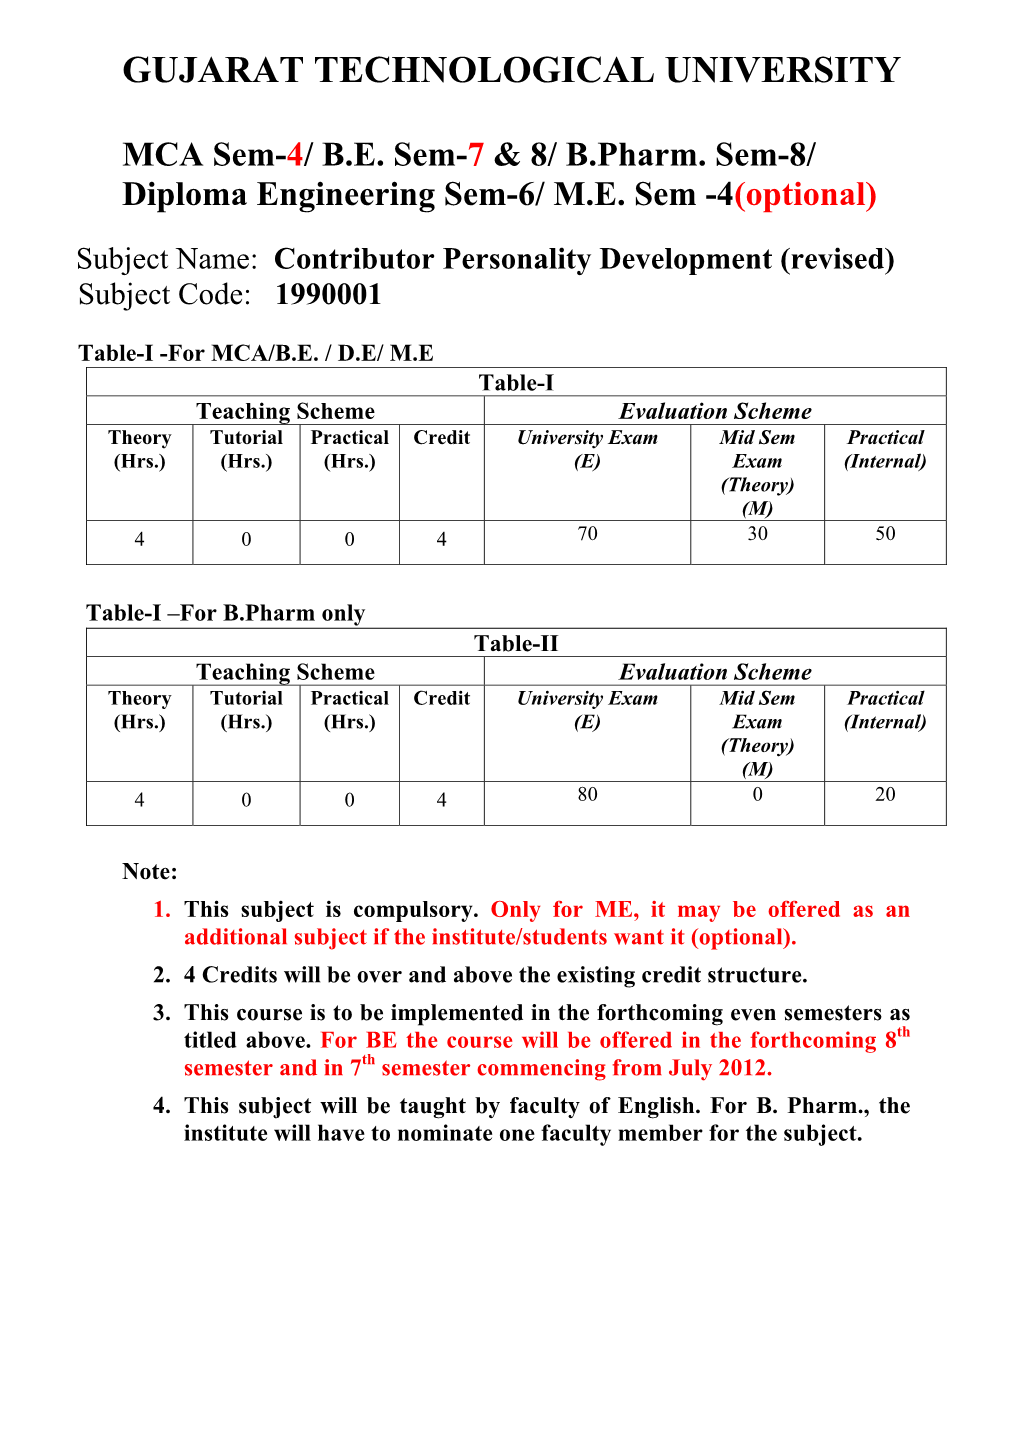 Contributor Personality Development (Revised) Subject Code: 1990001